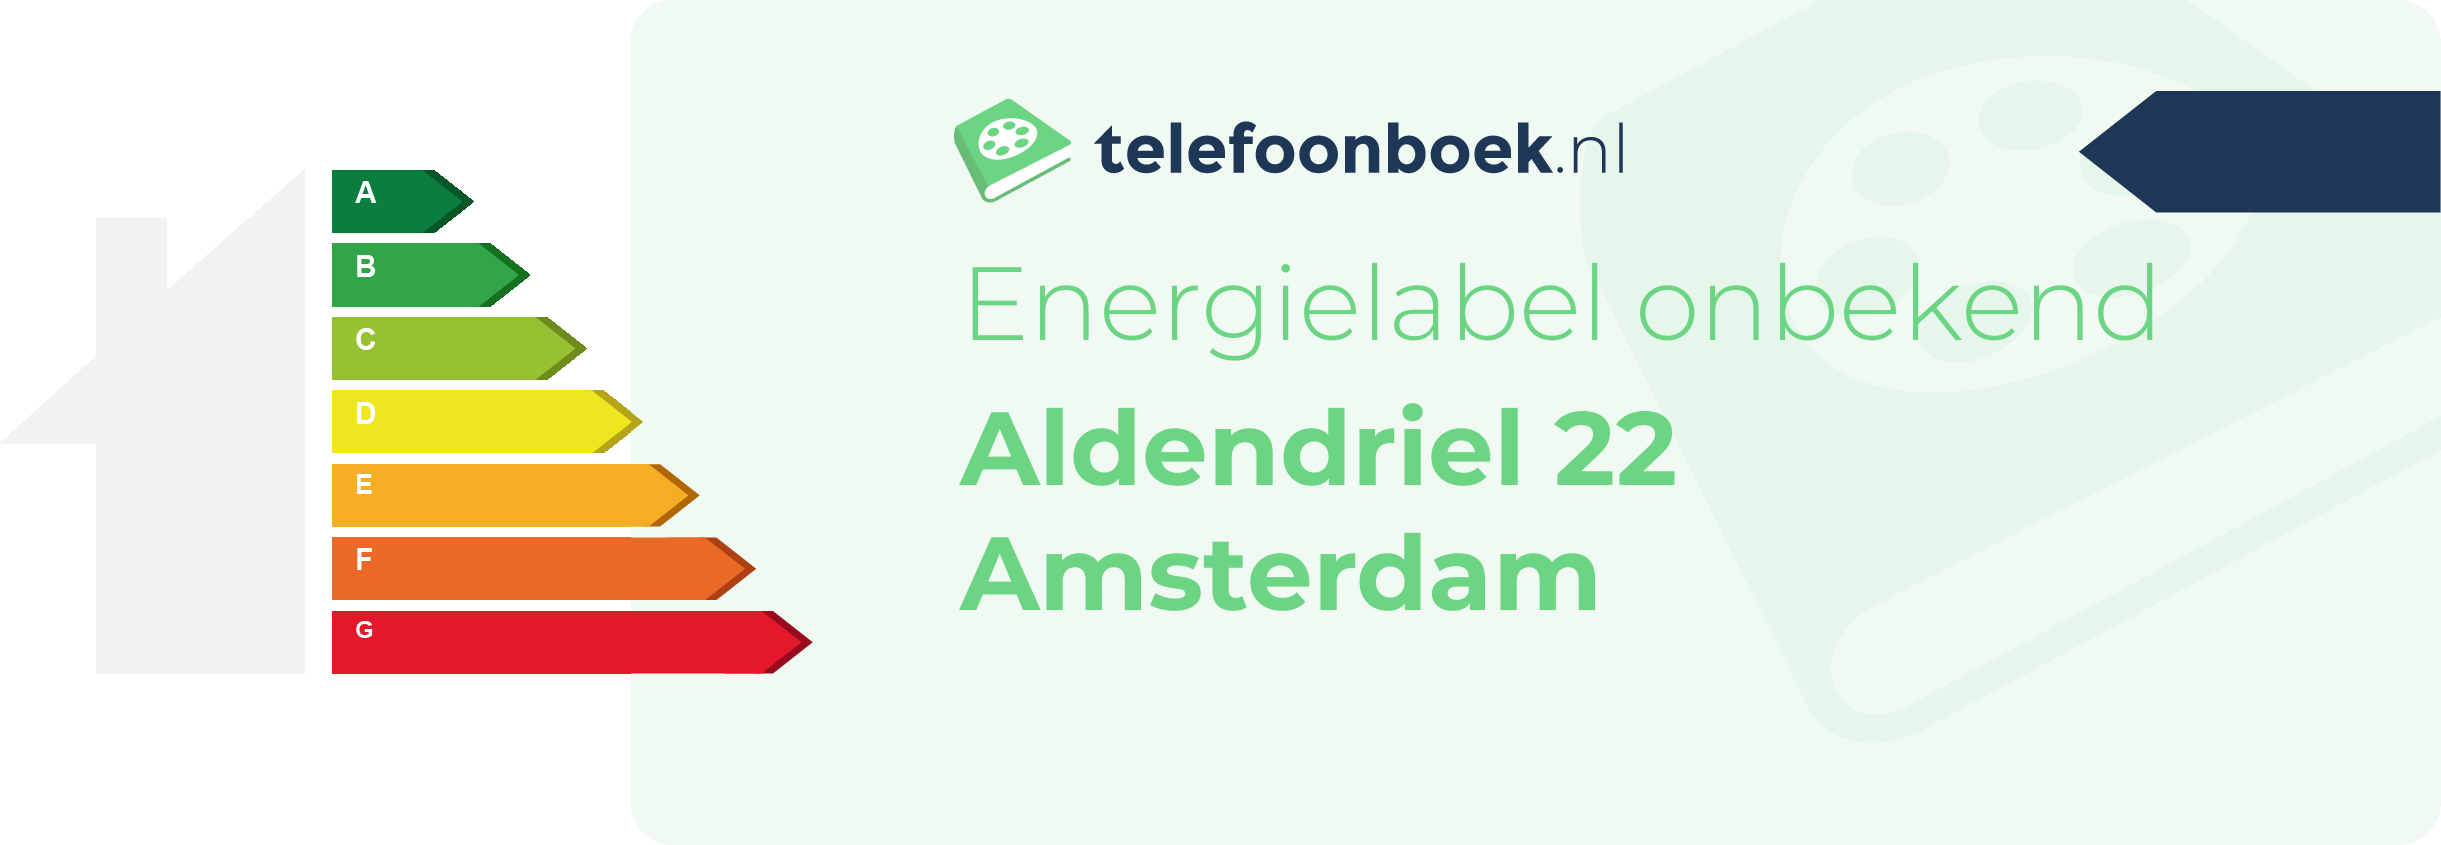 Energielabel Aldendriel 22 Amsterdam